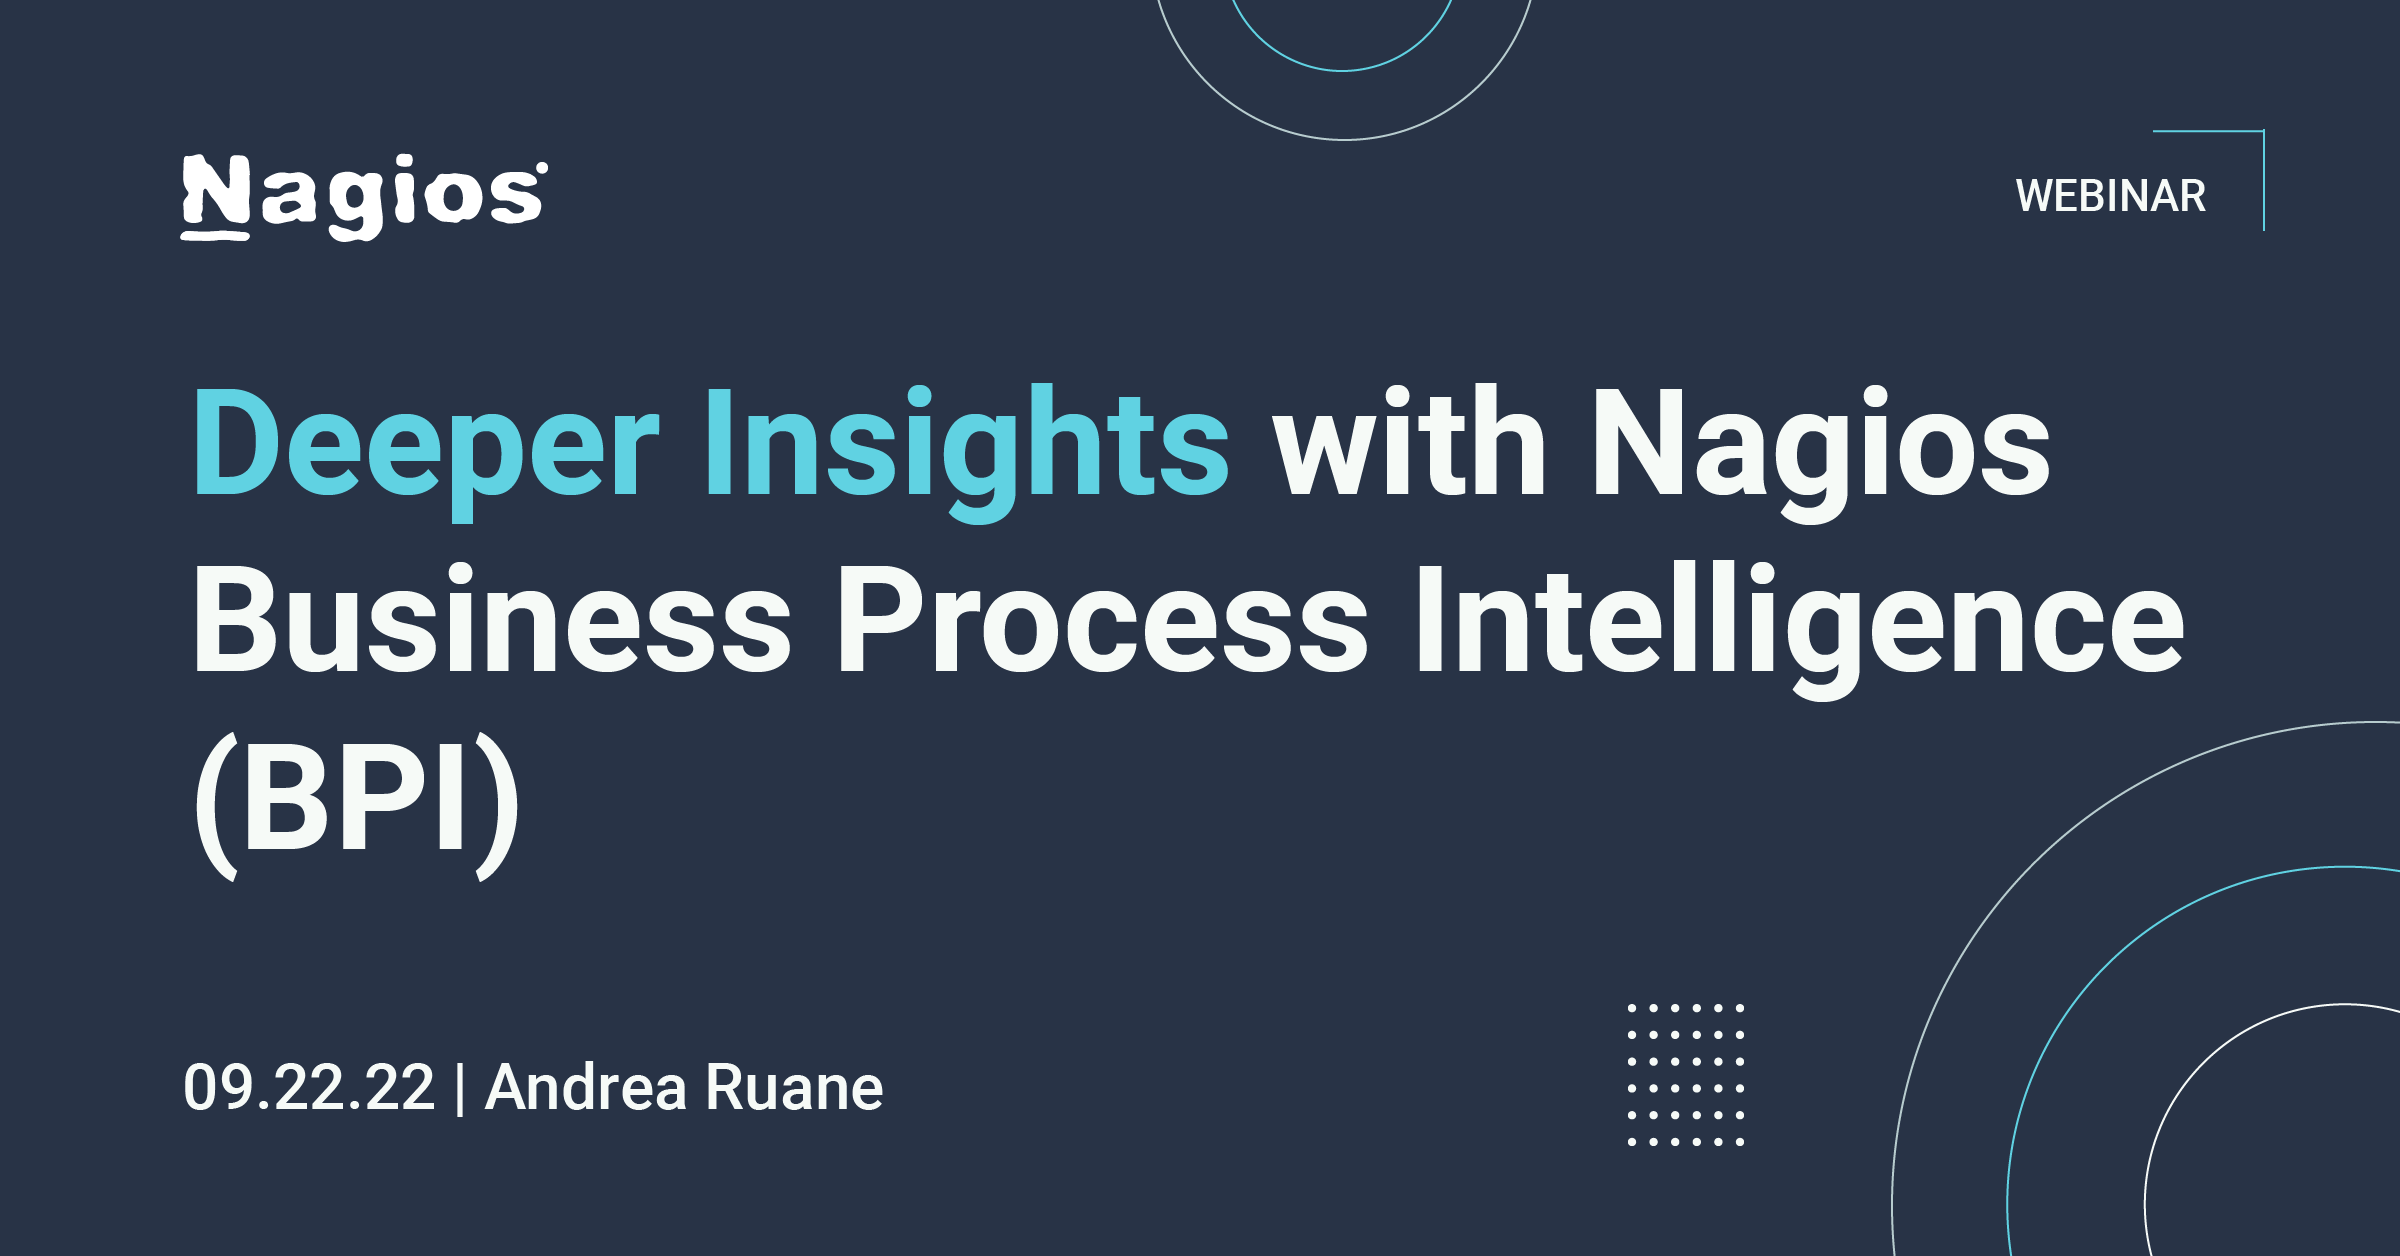 Nagios Webinar: Deeper Insights with Nagios Business Process Intelligence (BPI)